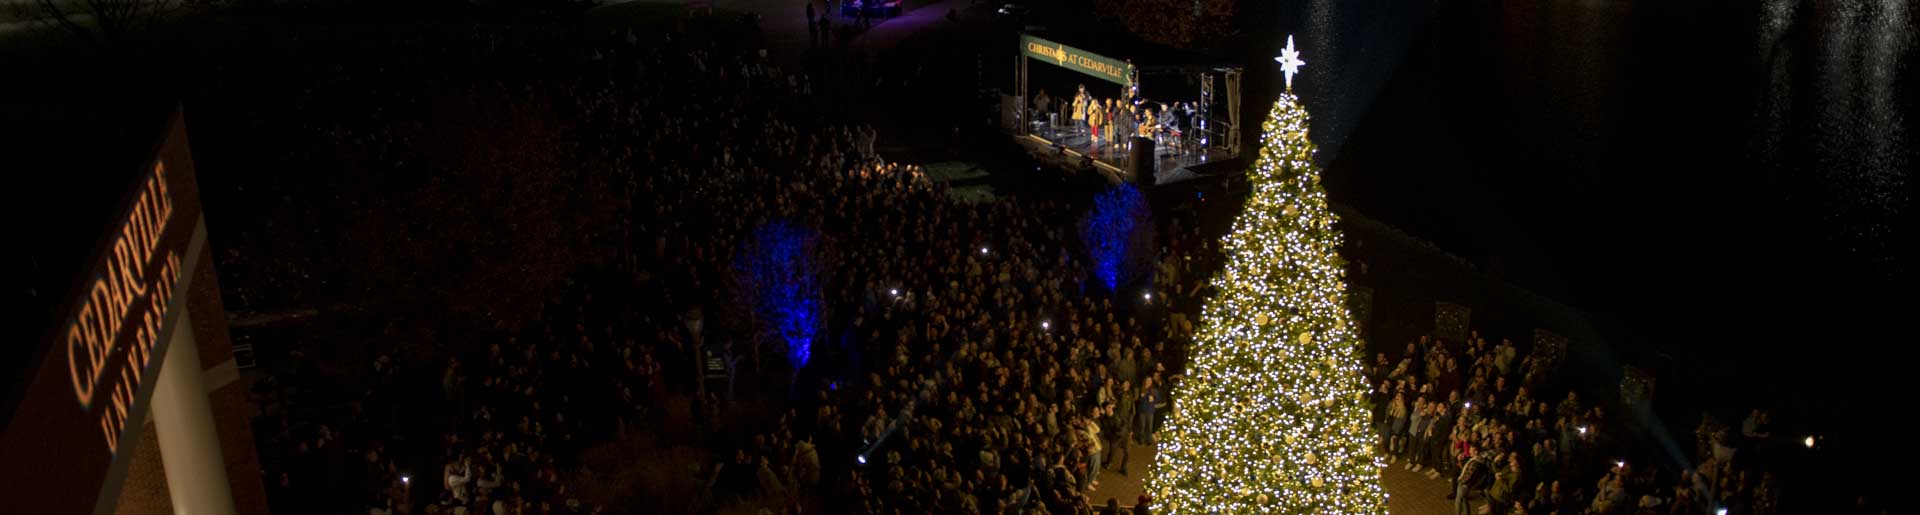 Fourth Annual Christmas Tree Lighting Ceremony Cedarville University